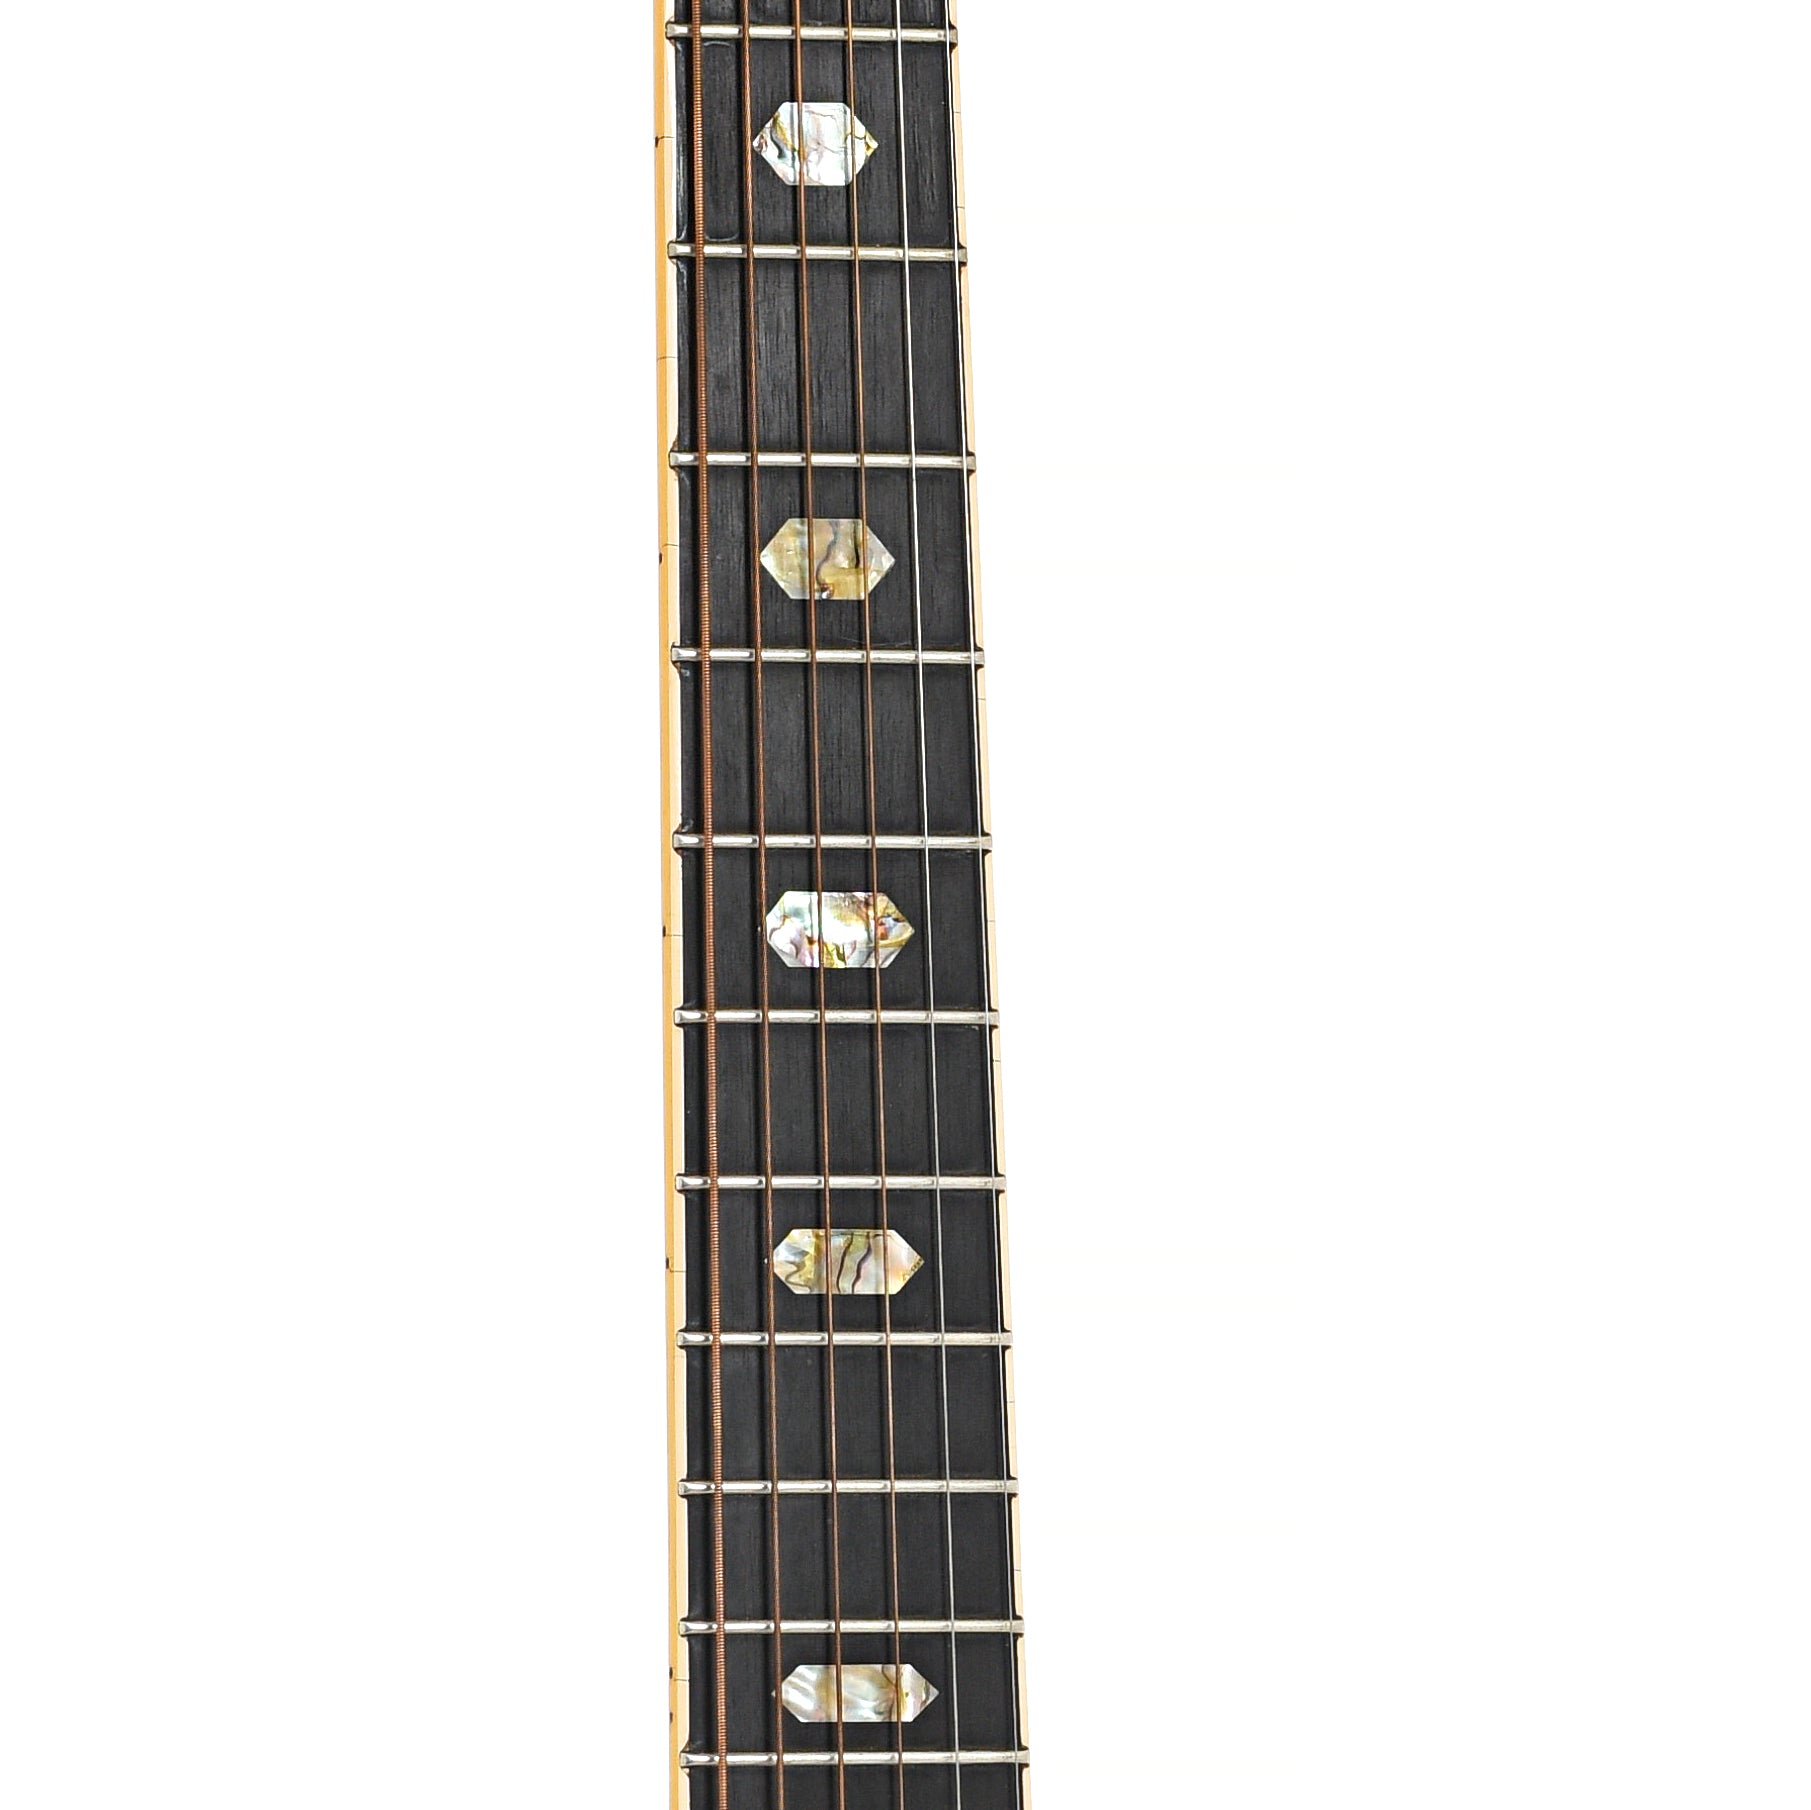 Fretboard of Martin D-41 Acoustic Guitar (1999)